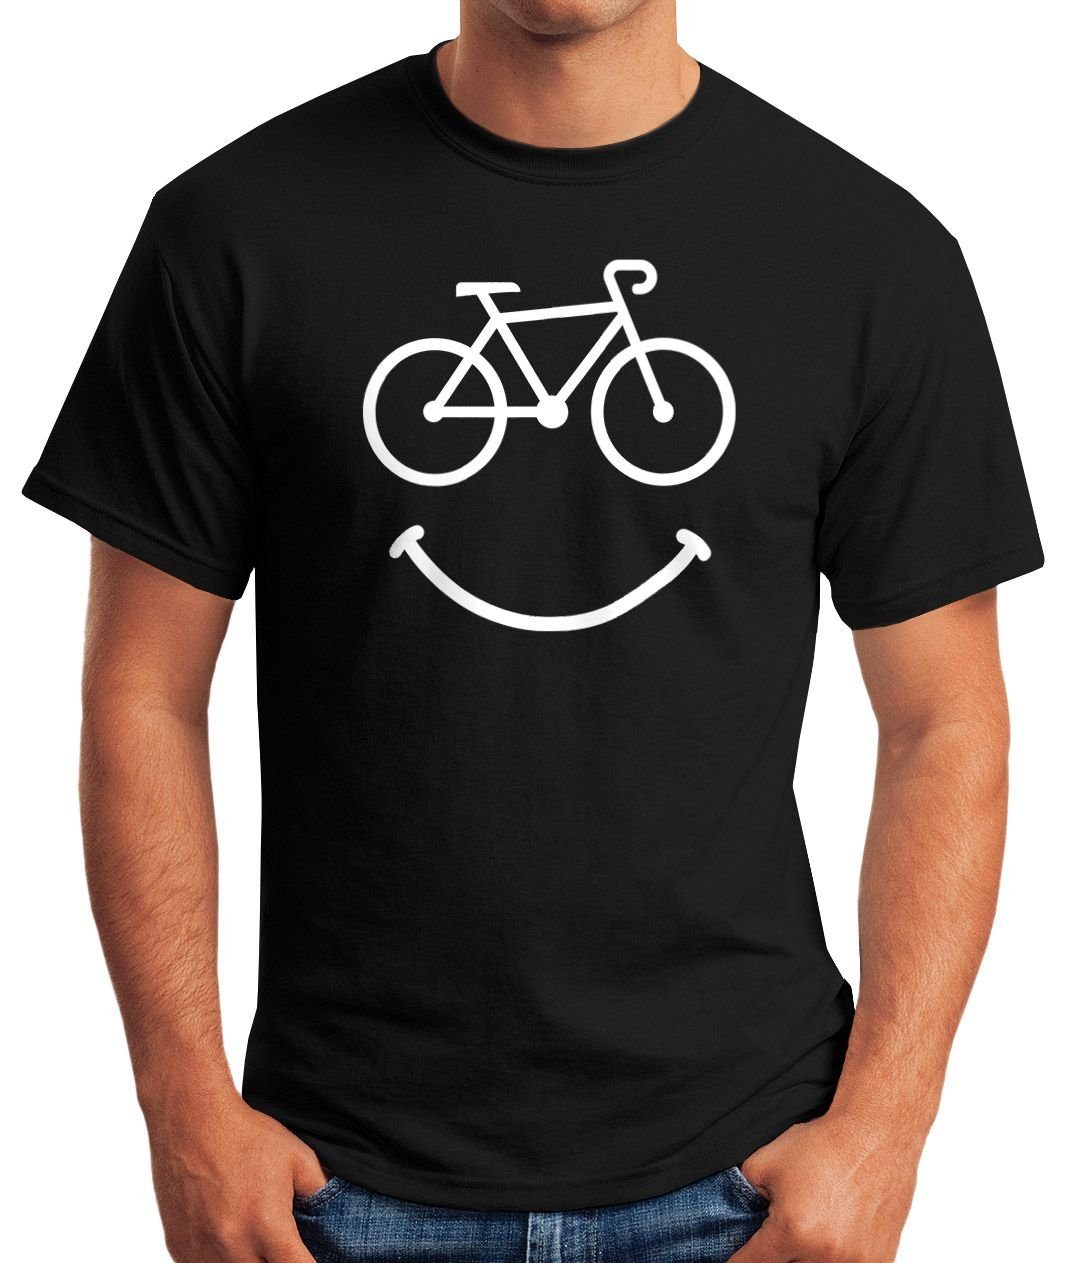 MoonWorks Print-Shirt Fahrrad Herren T-Shirt Print Moonworks® Bike Smile schwarz Happy mit Fun-Shirt Radfahren